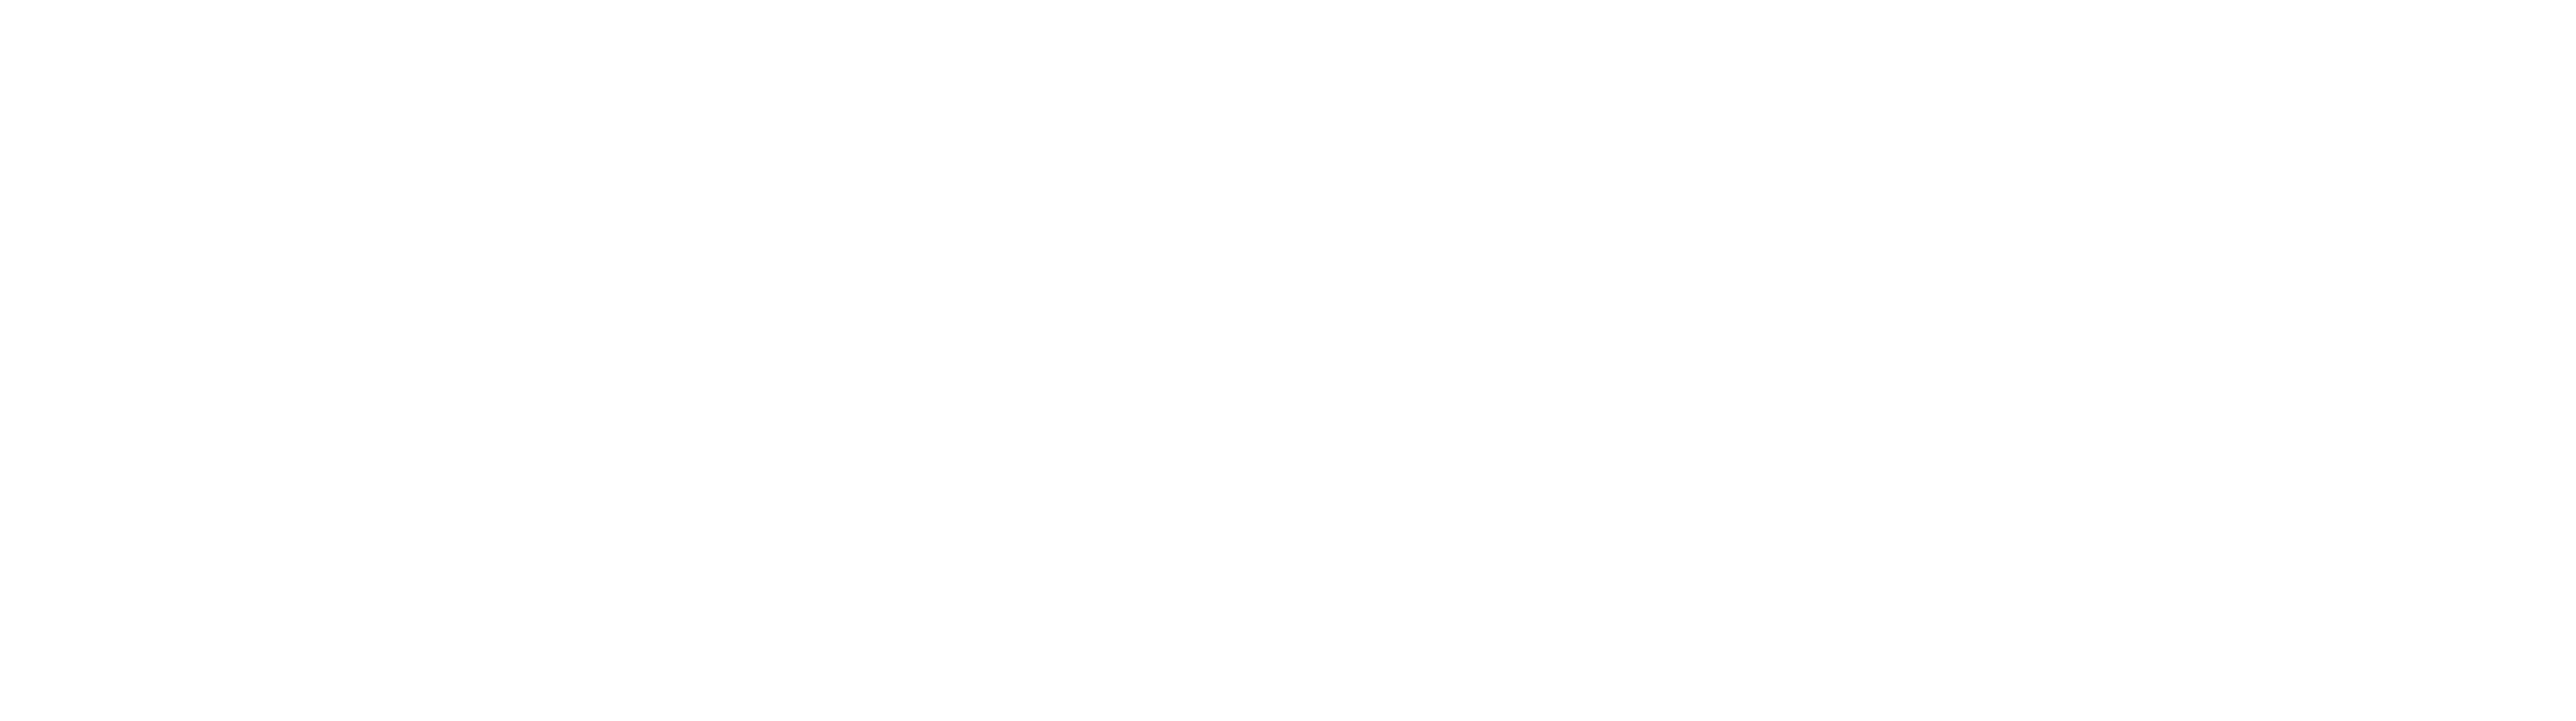 Castrum Work